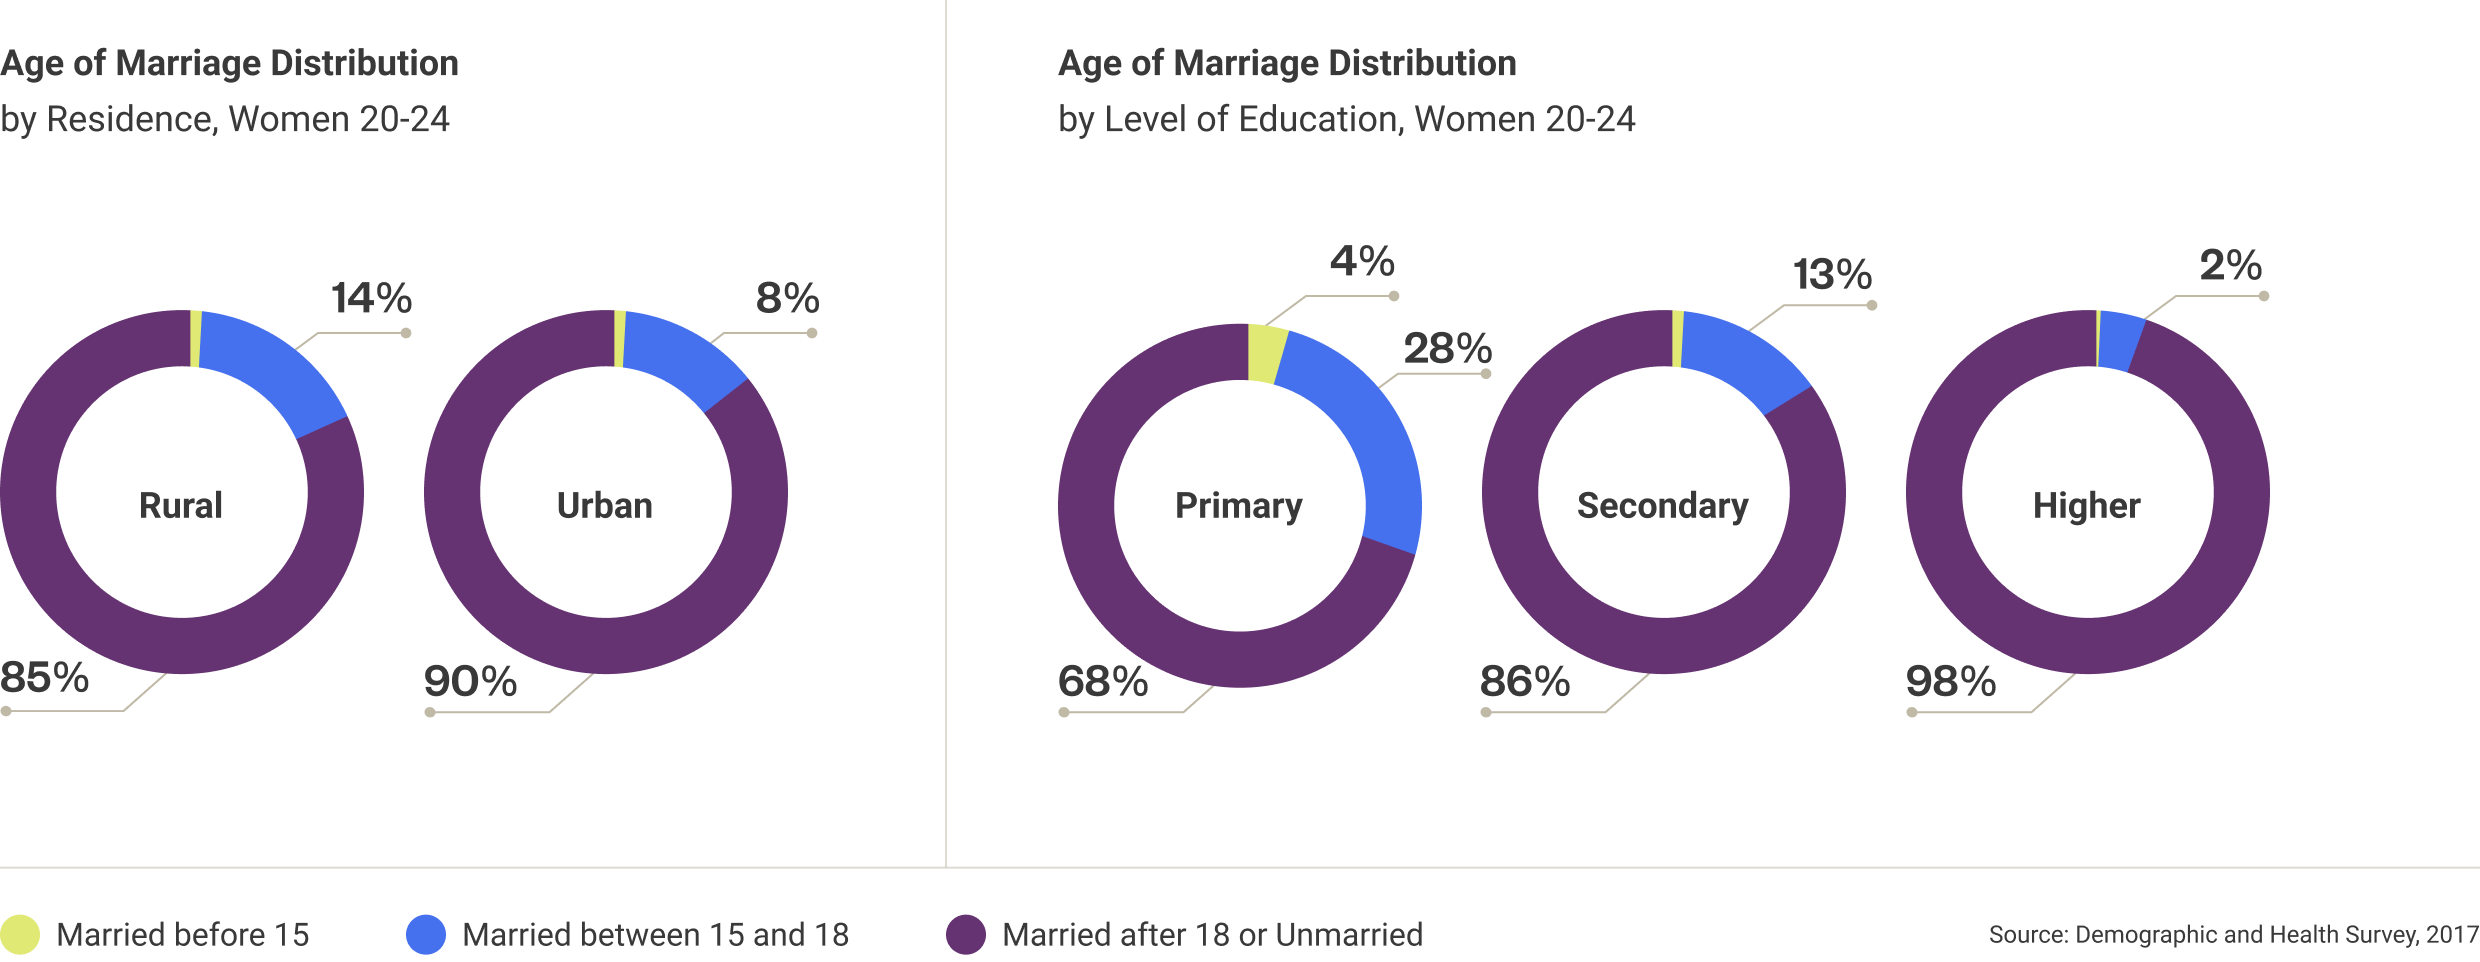 albania-age-of-marriage-distribution-1